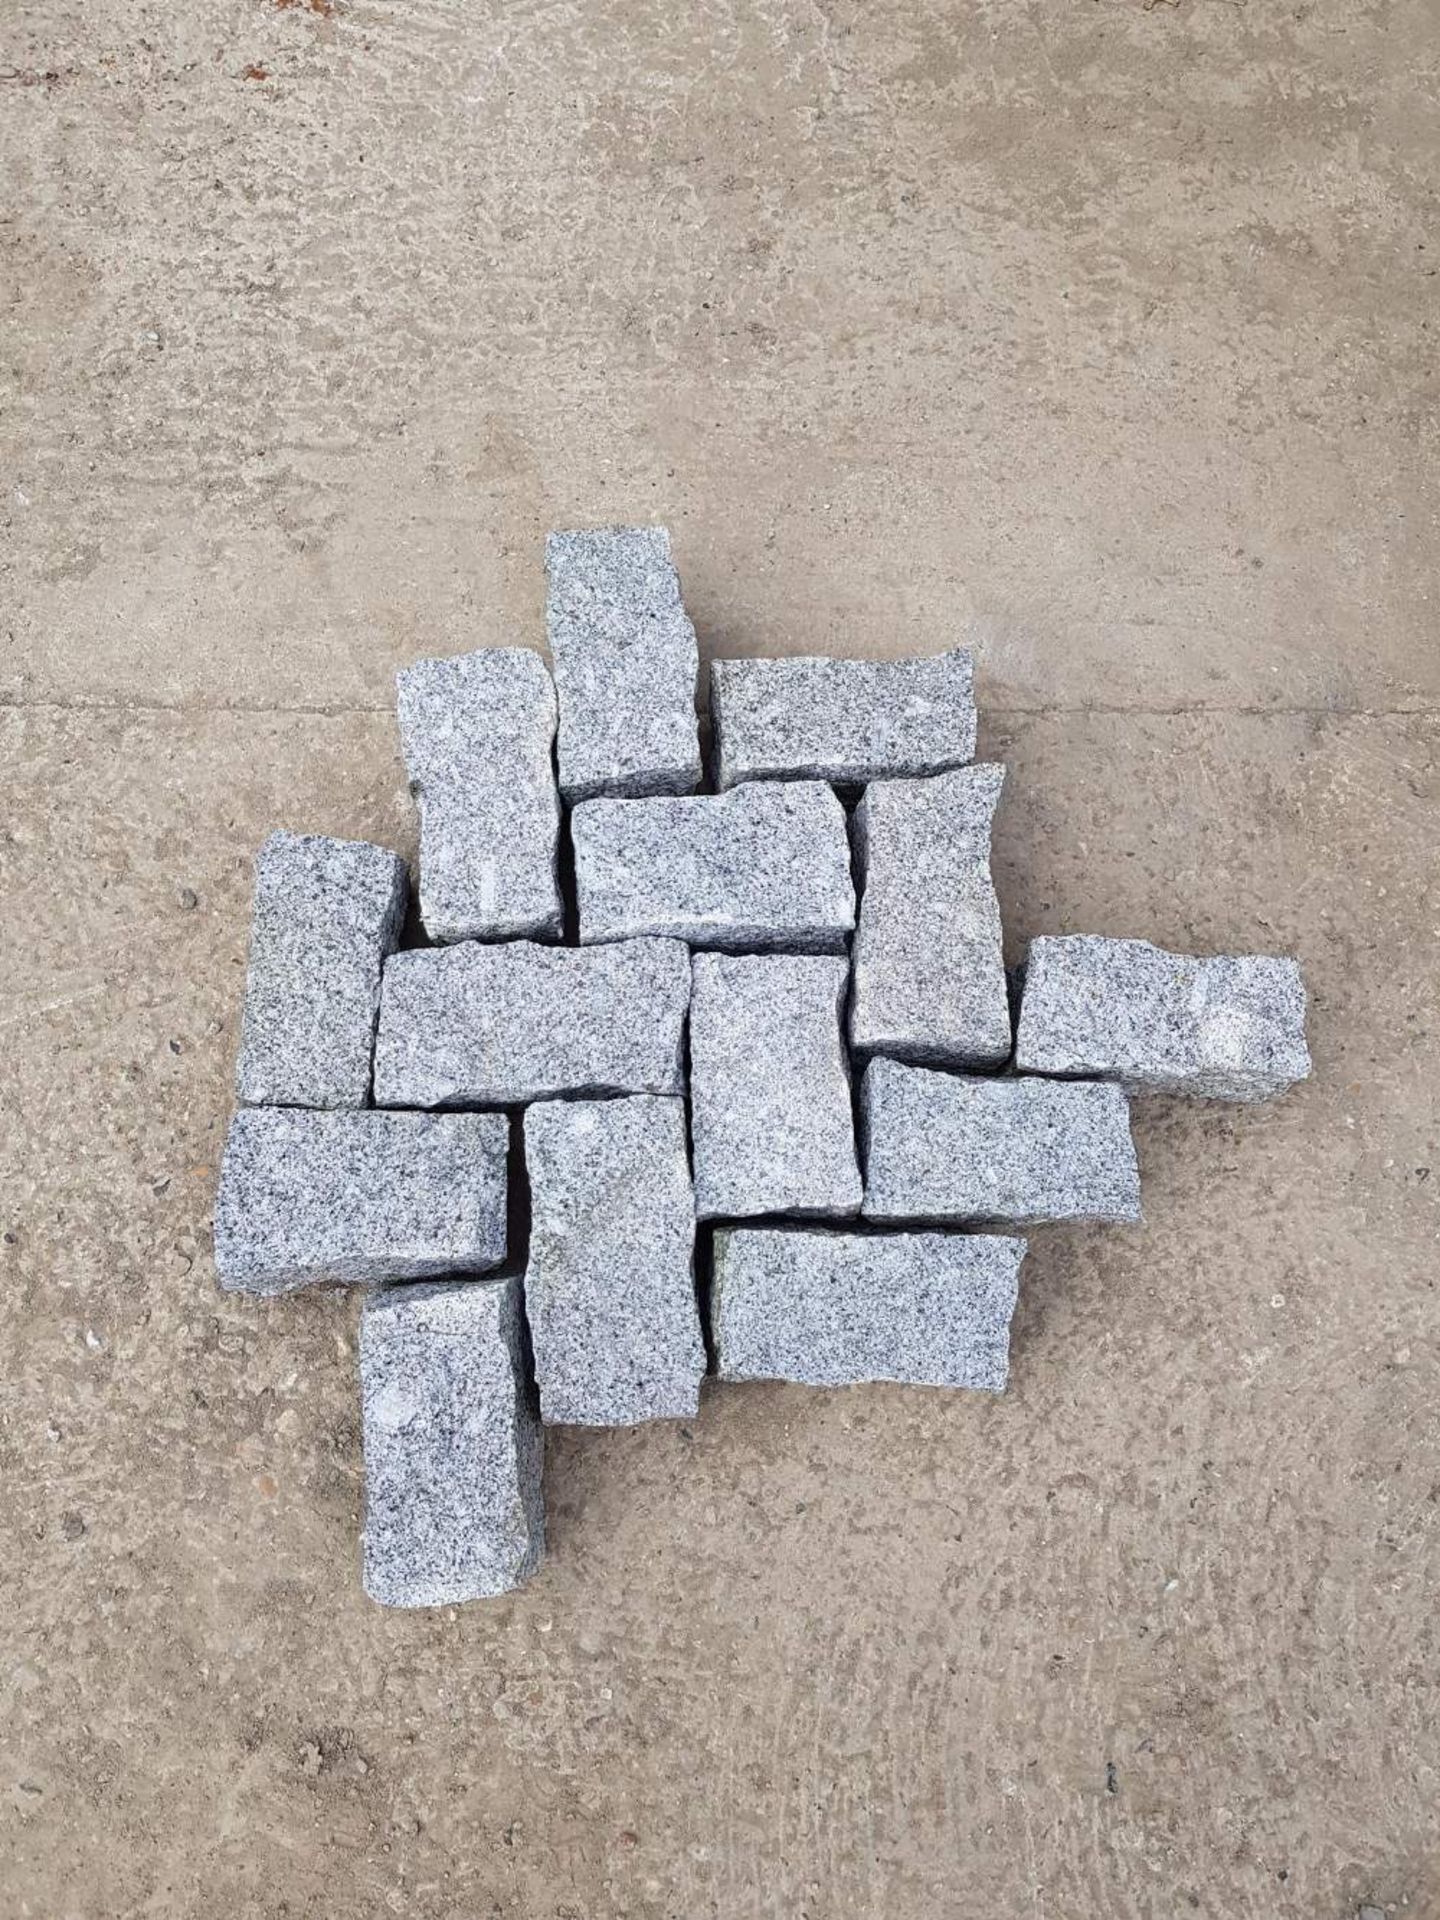 Cropped Granite sets…10 PALLETS IN TOTAL..HIGH GRADE SETS!! LOT LOCATION: 2 Main Road, Sundridge, Nr - Image 3 of 5